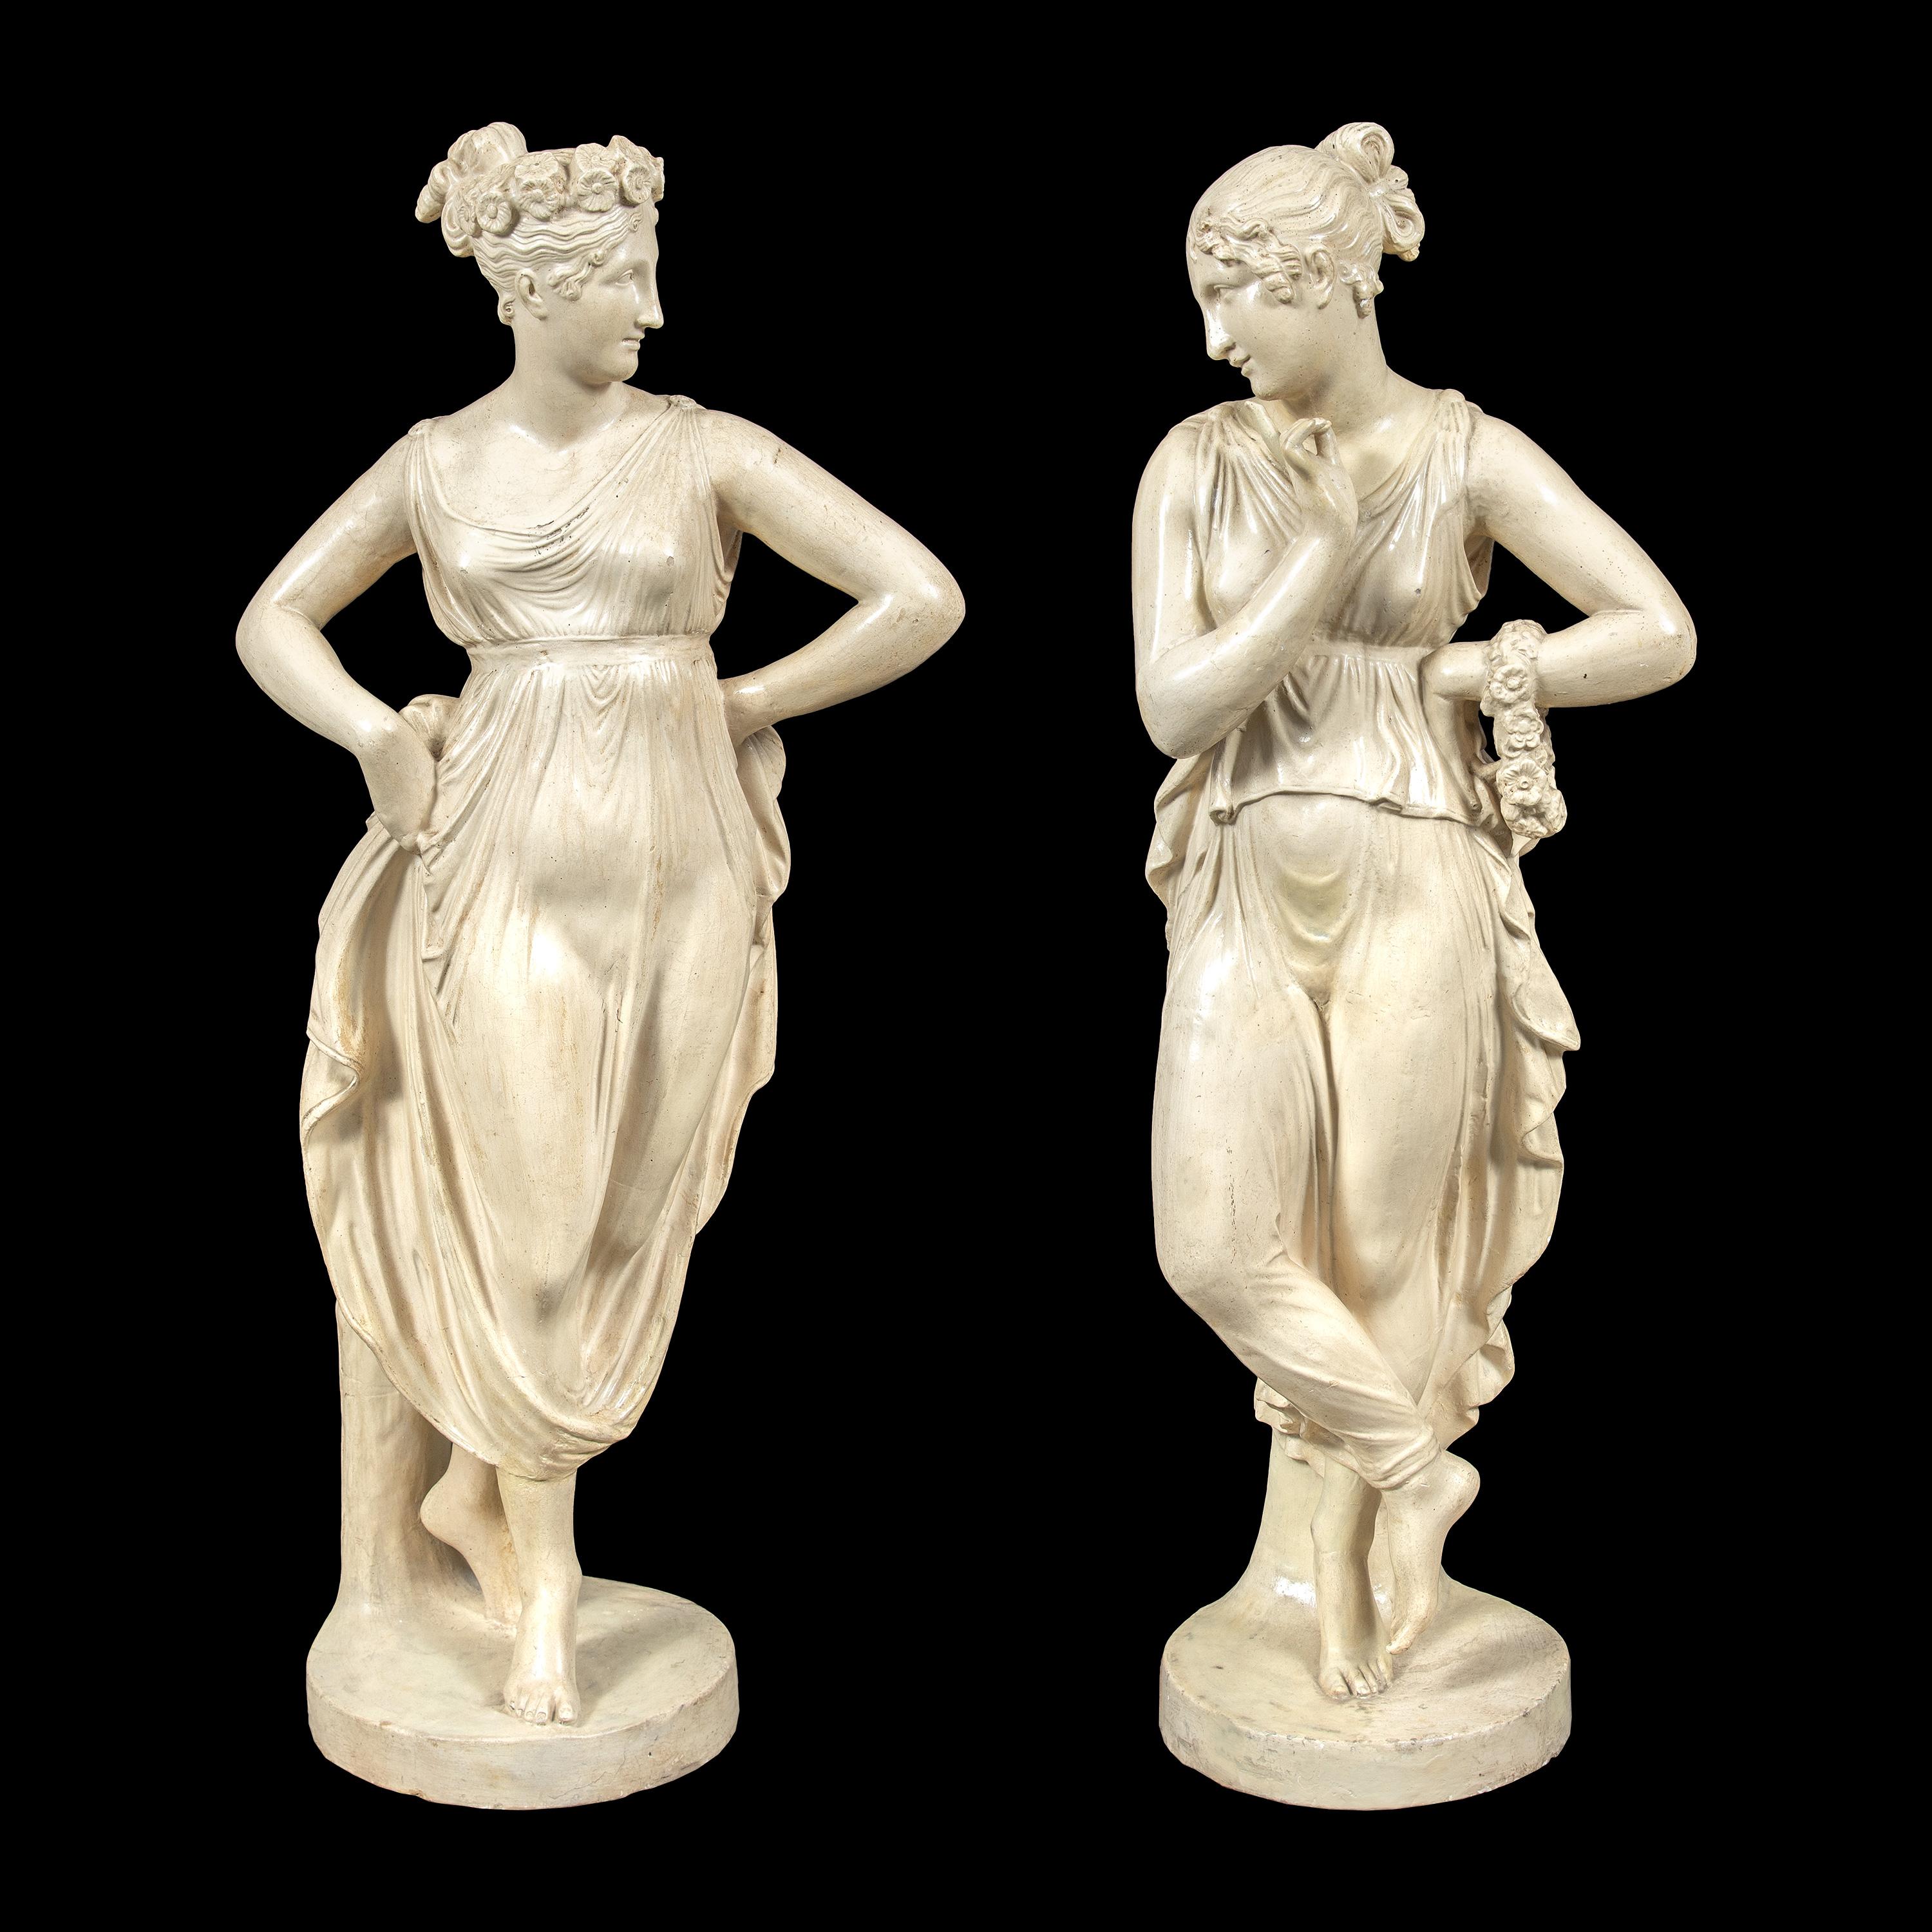 Follower of Antonio Canova - Pair of 19-20th century neoclassical sculptures